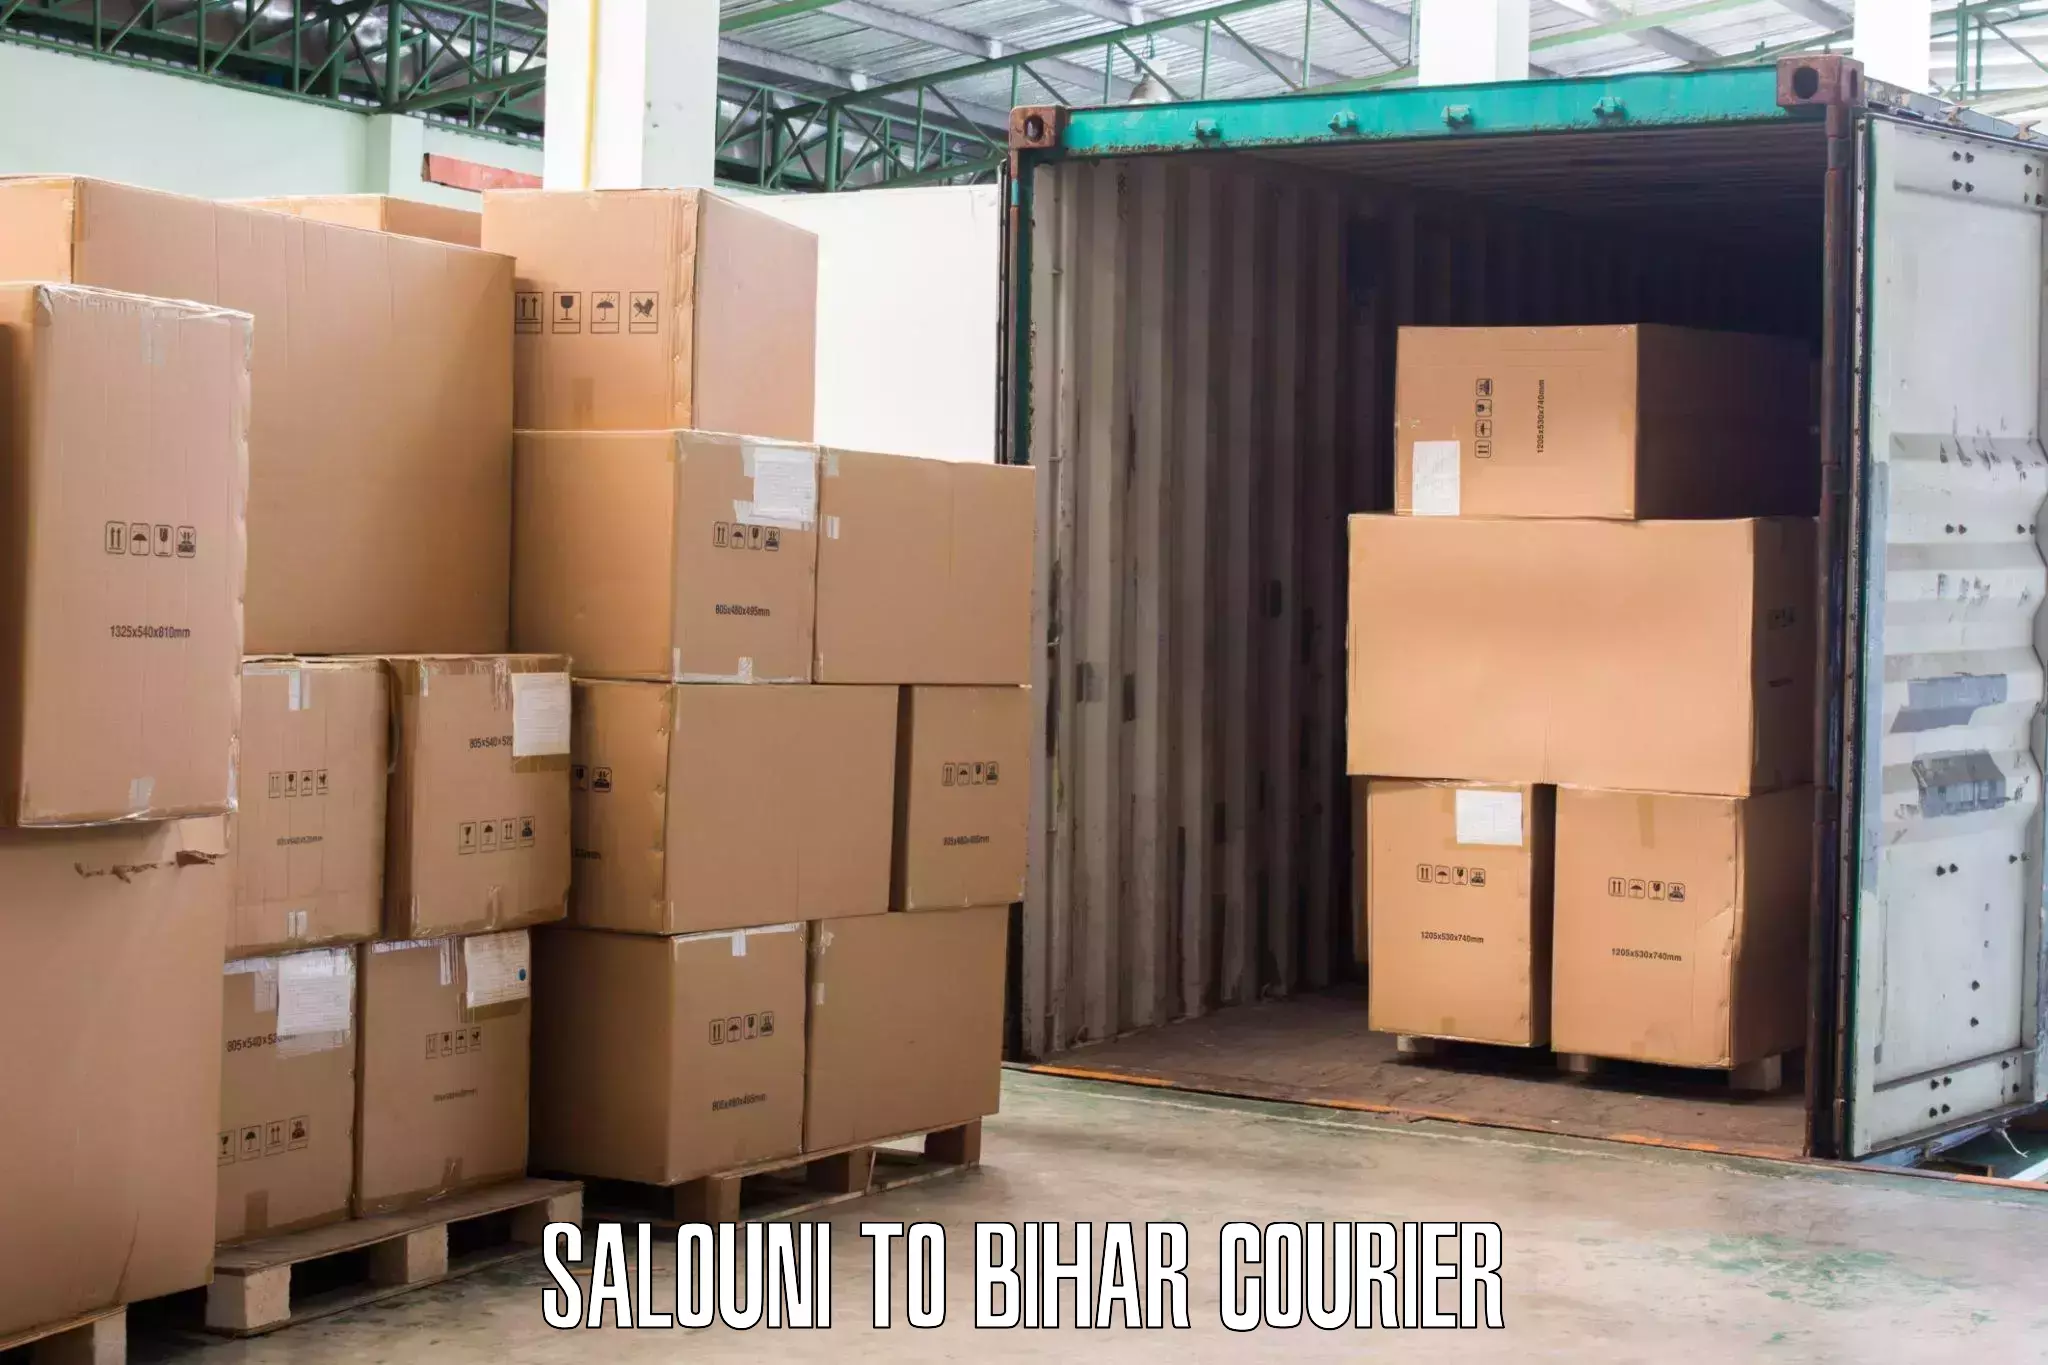 Moving and storage services Salouni to Bihta